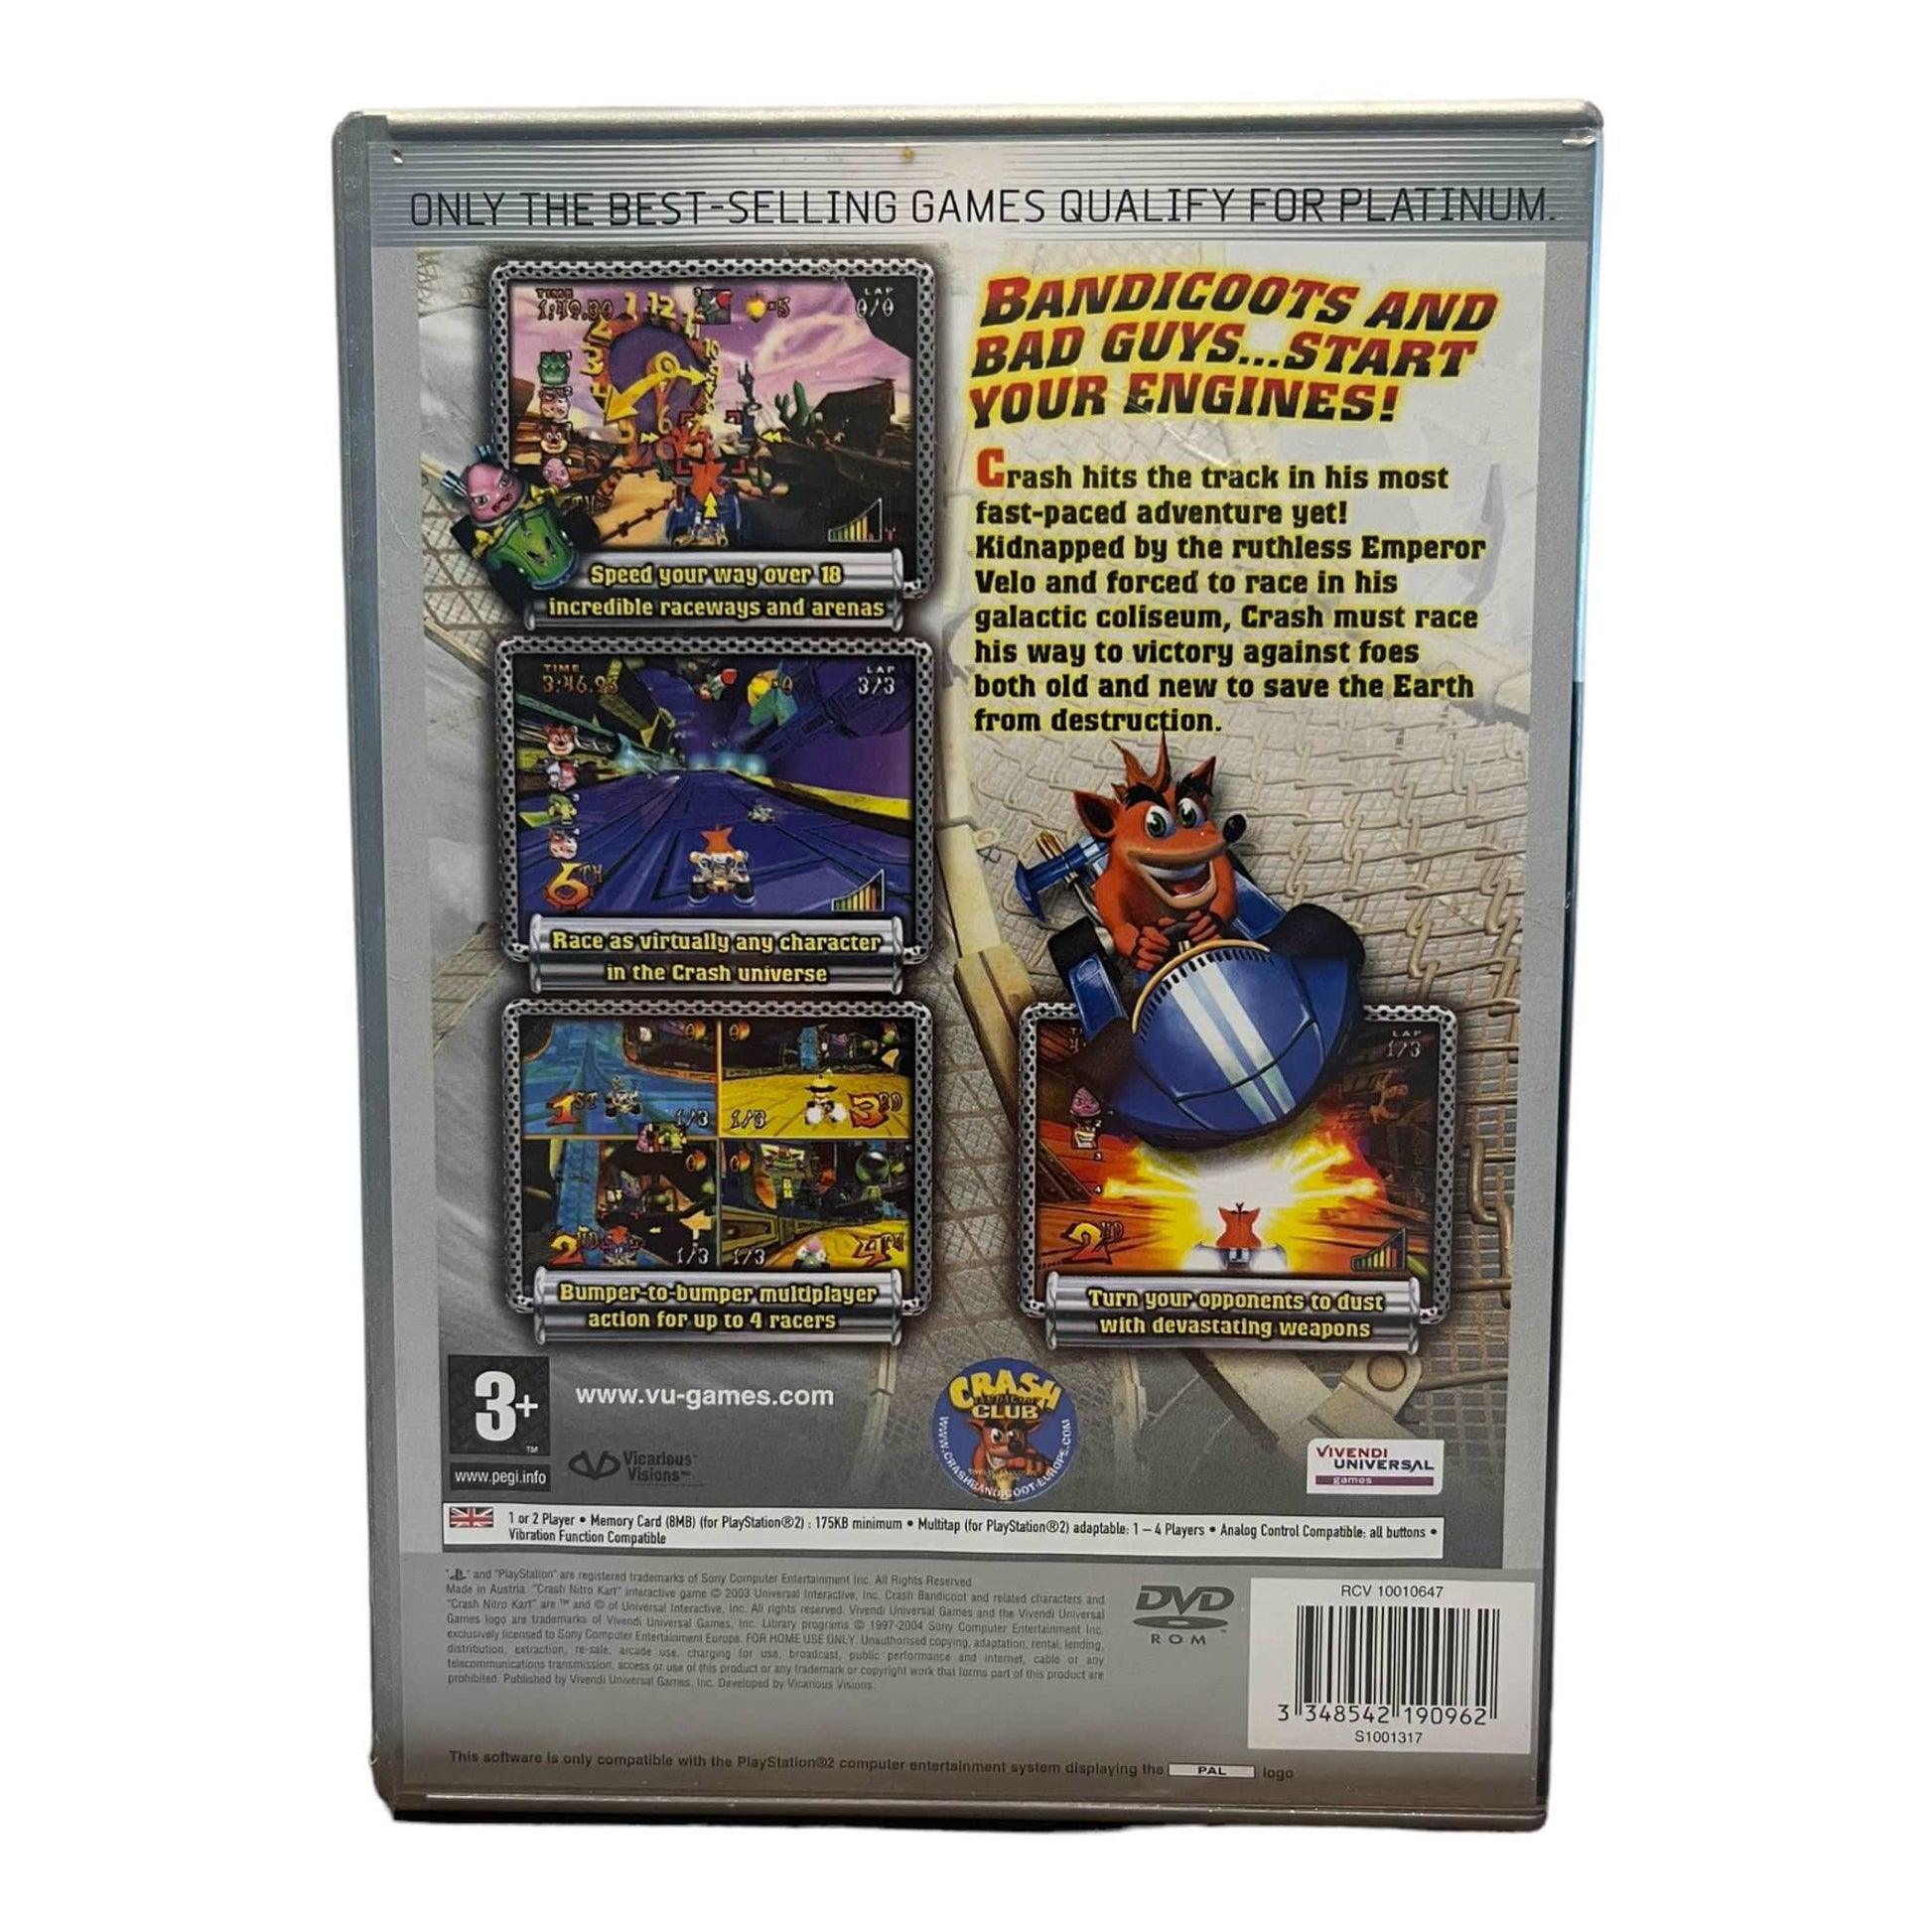 Crash: Nitro Kart - PS2 - Platinum